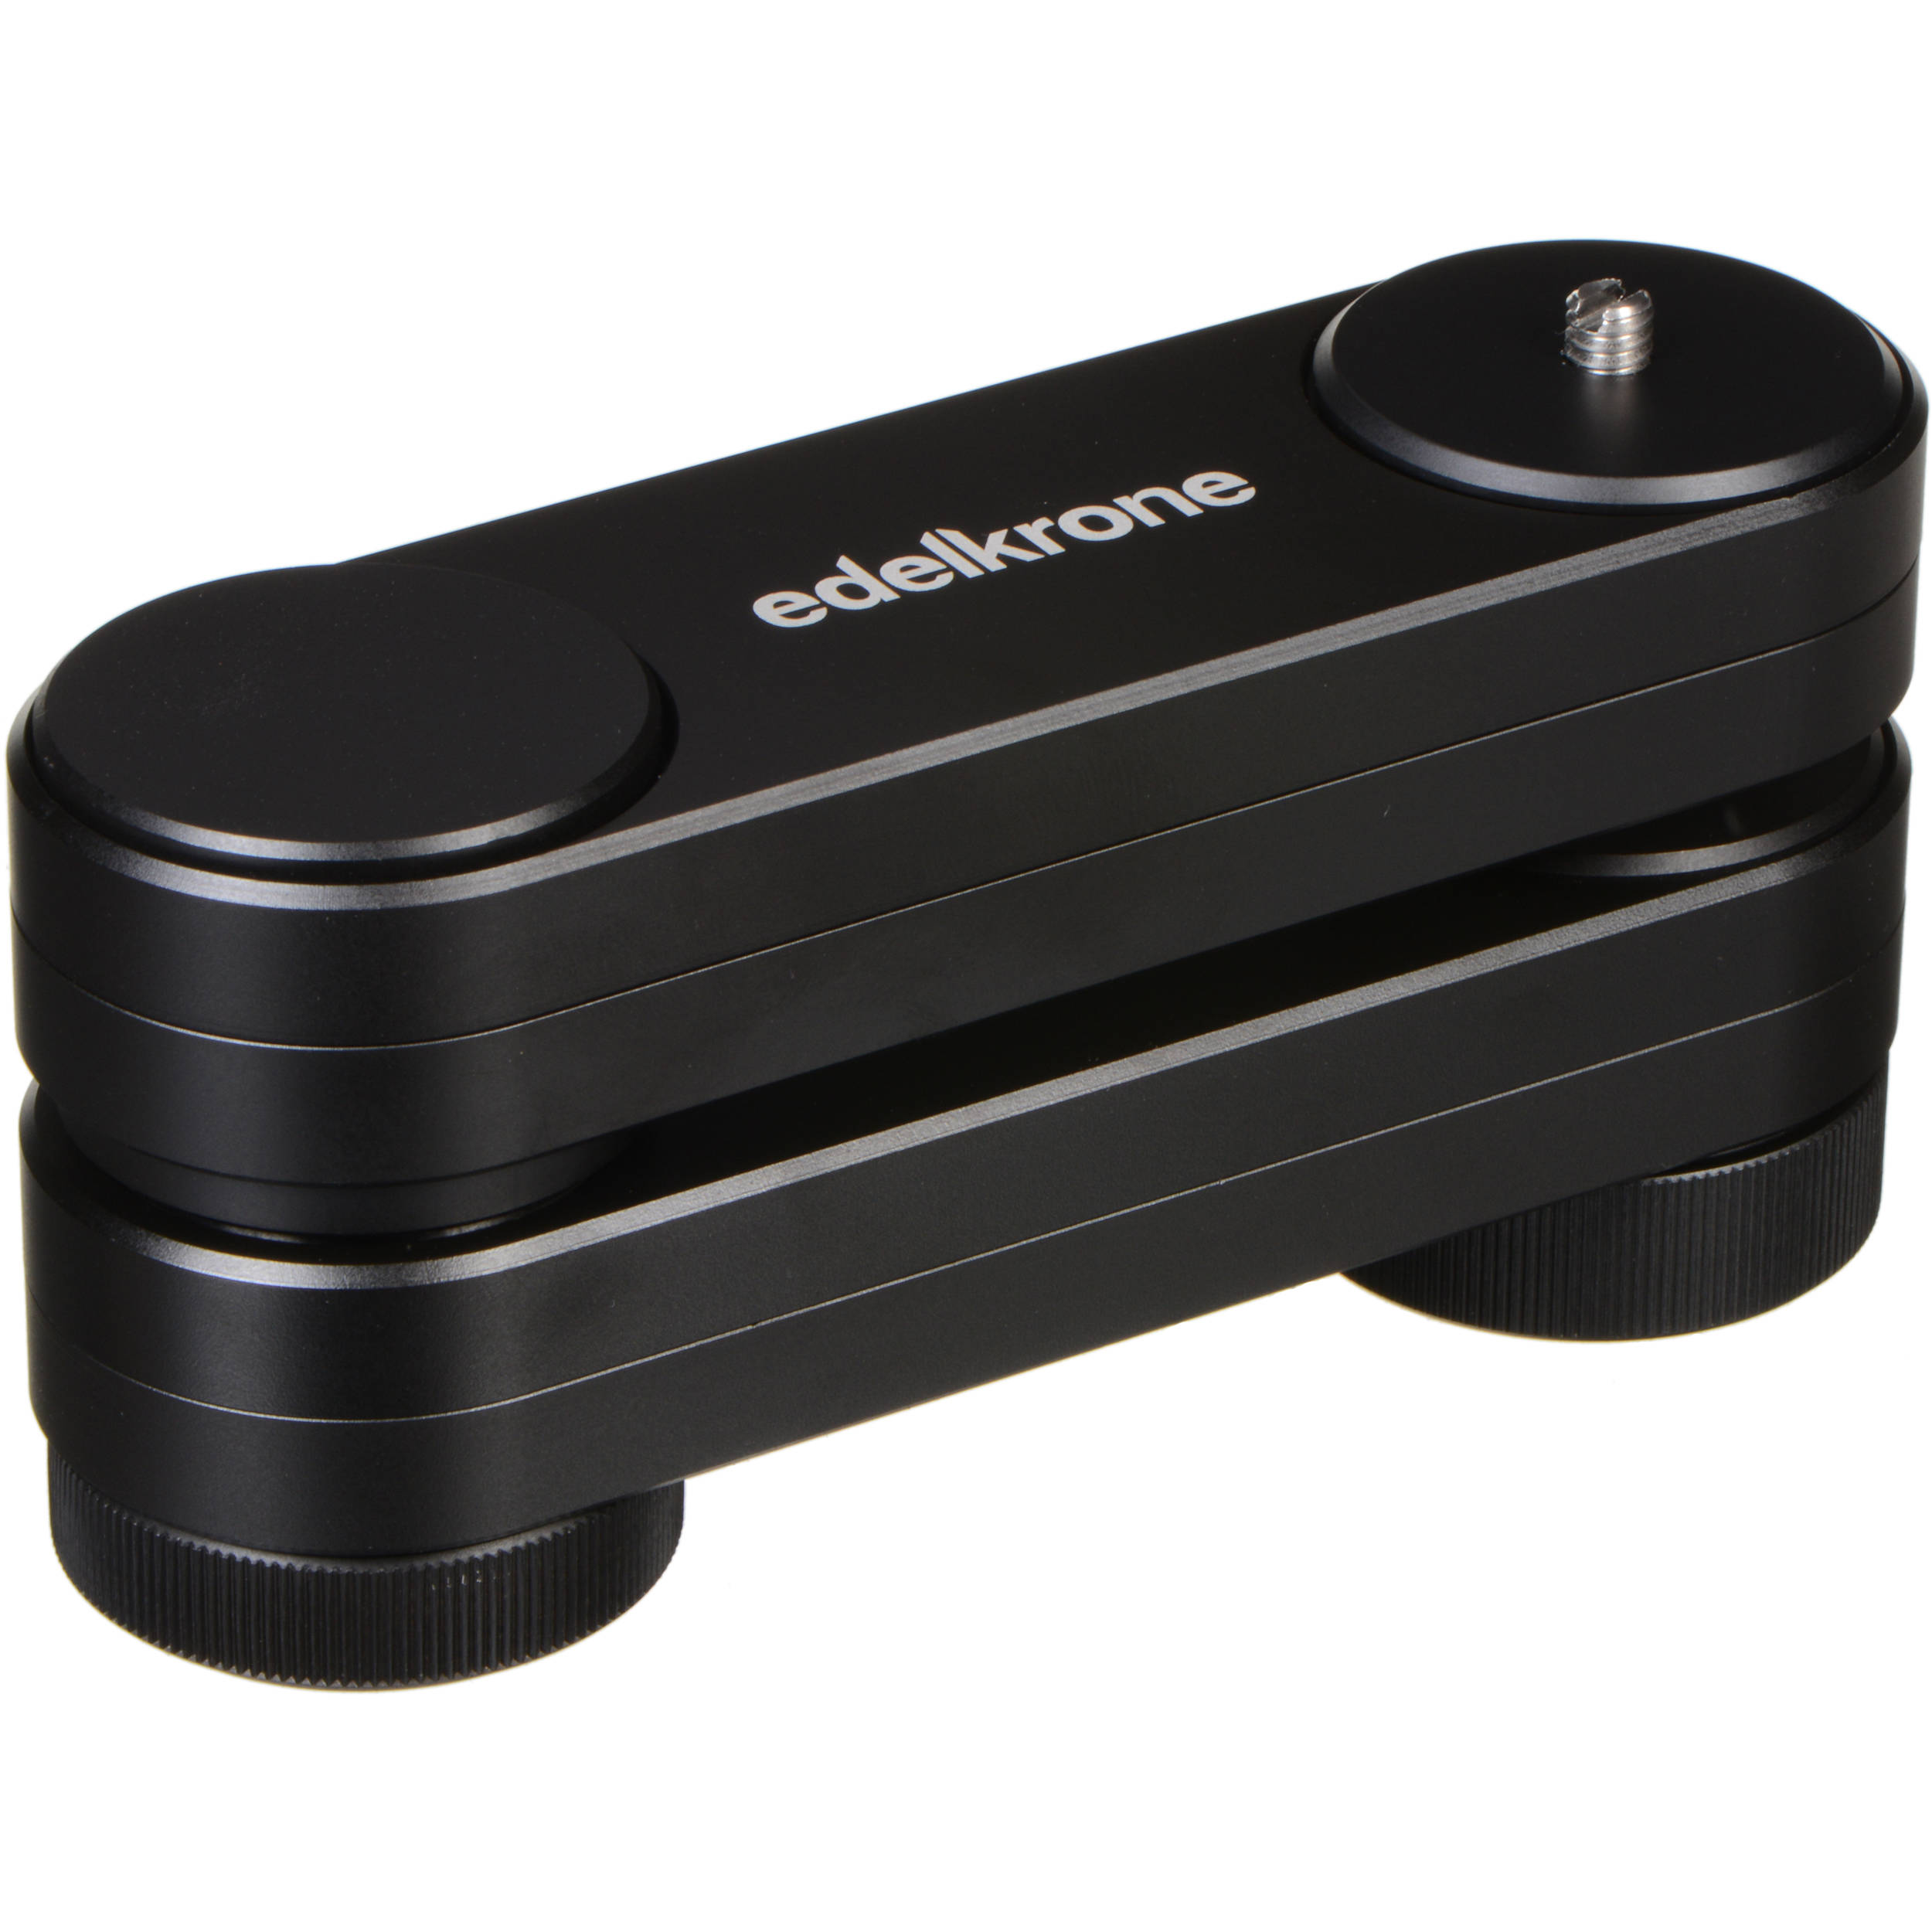 Edelkrone Wing 3 Slider For Small Cameras Smartphones